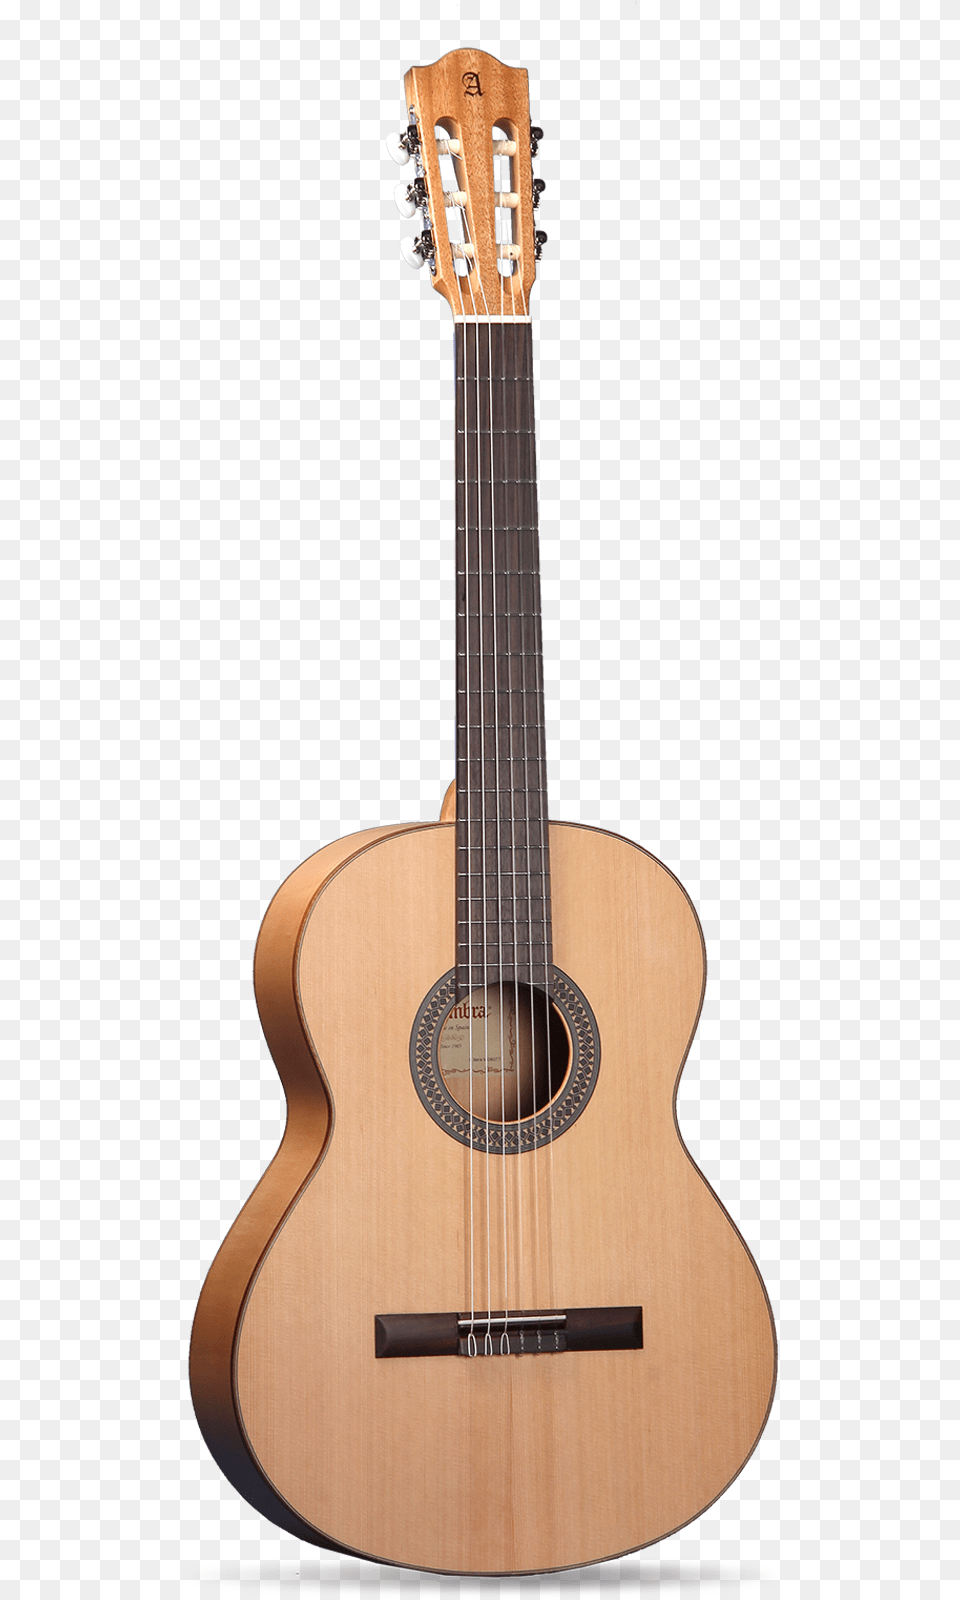 F Flamenco Model Alhambra Guitars Godin Fretless Guitar, Musical Instrument, Bass Guitar Png Image